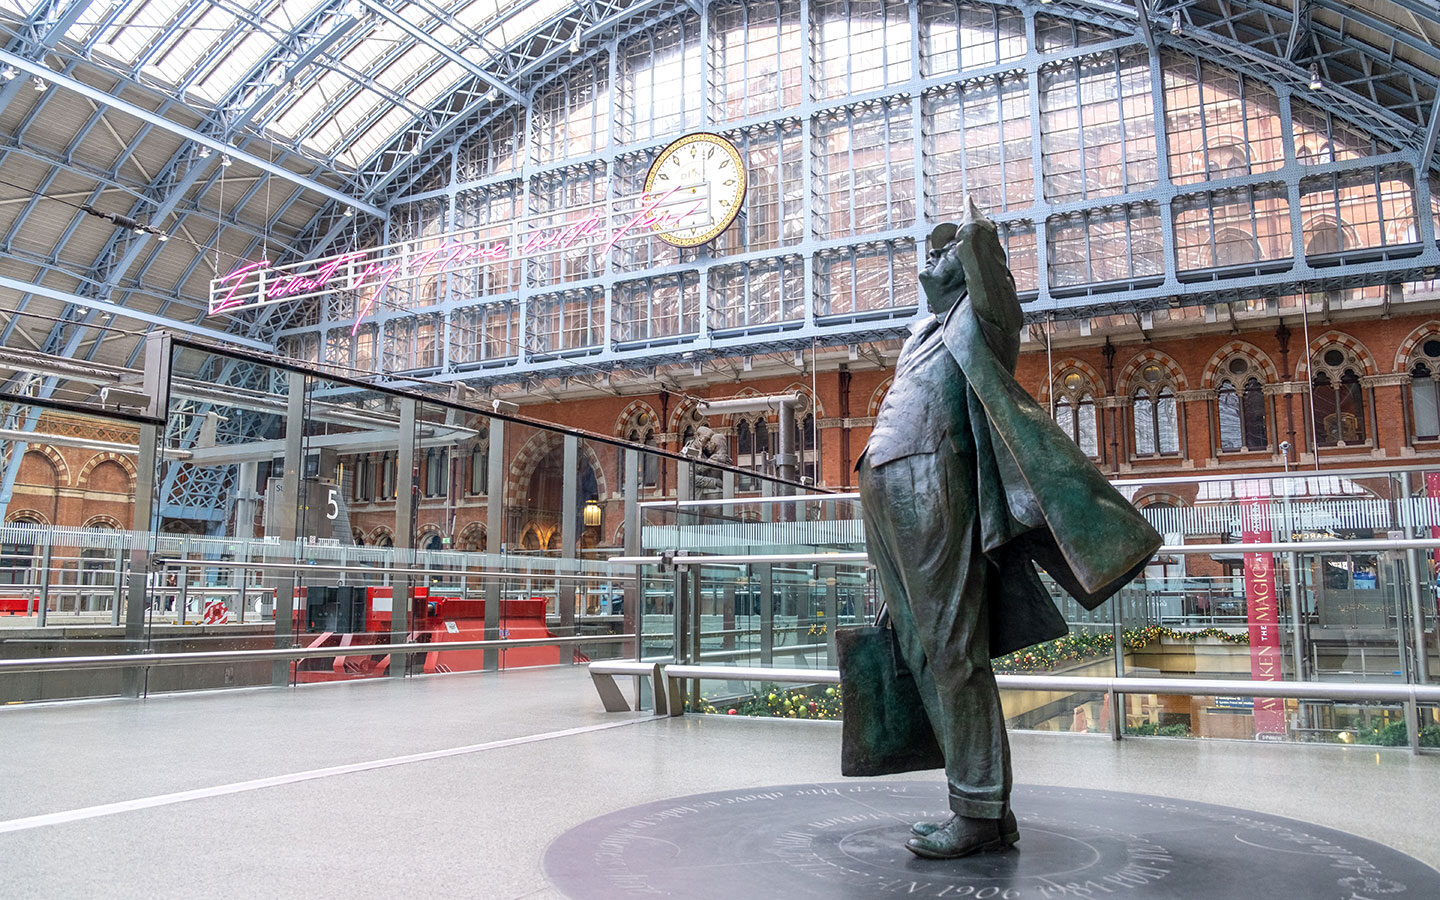 Statue of John Betjeman at St Pancras station in London